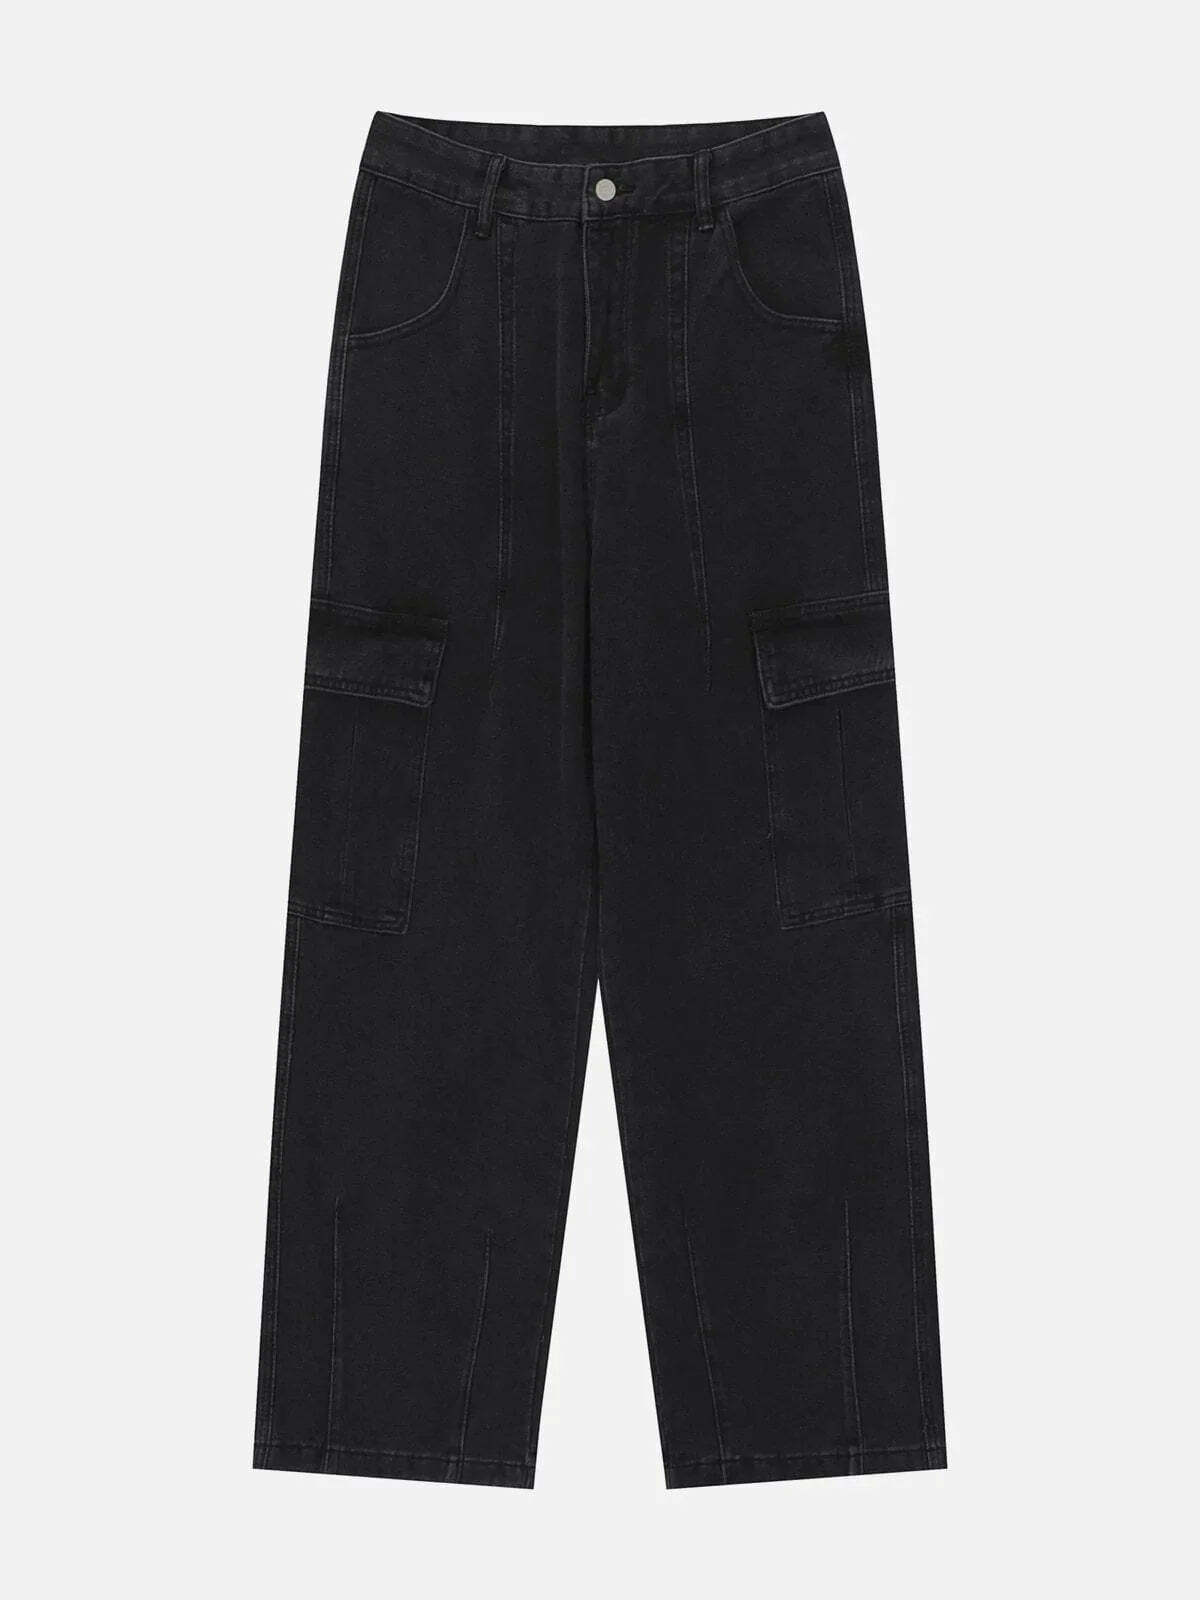 vintage patched pocket jeans edgy y2k streetwear 4006